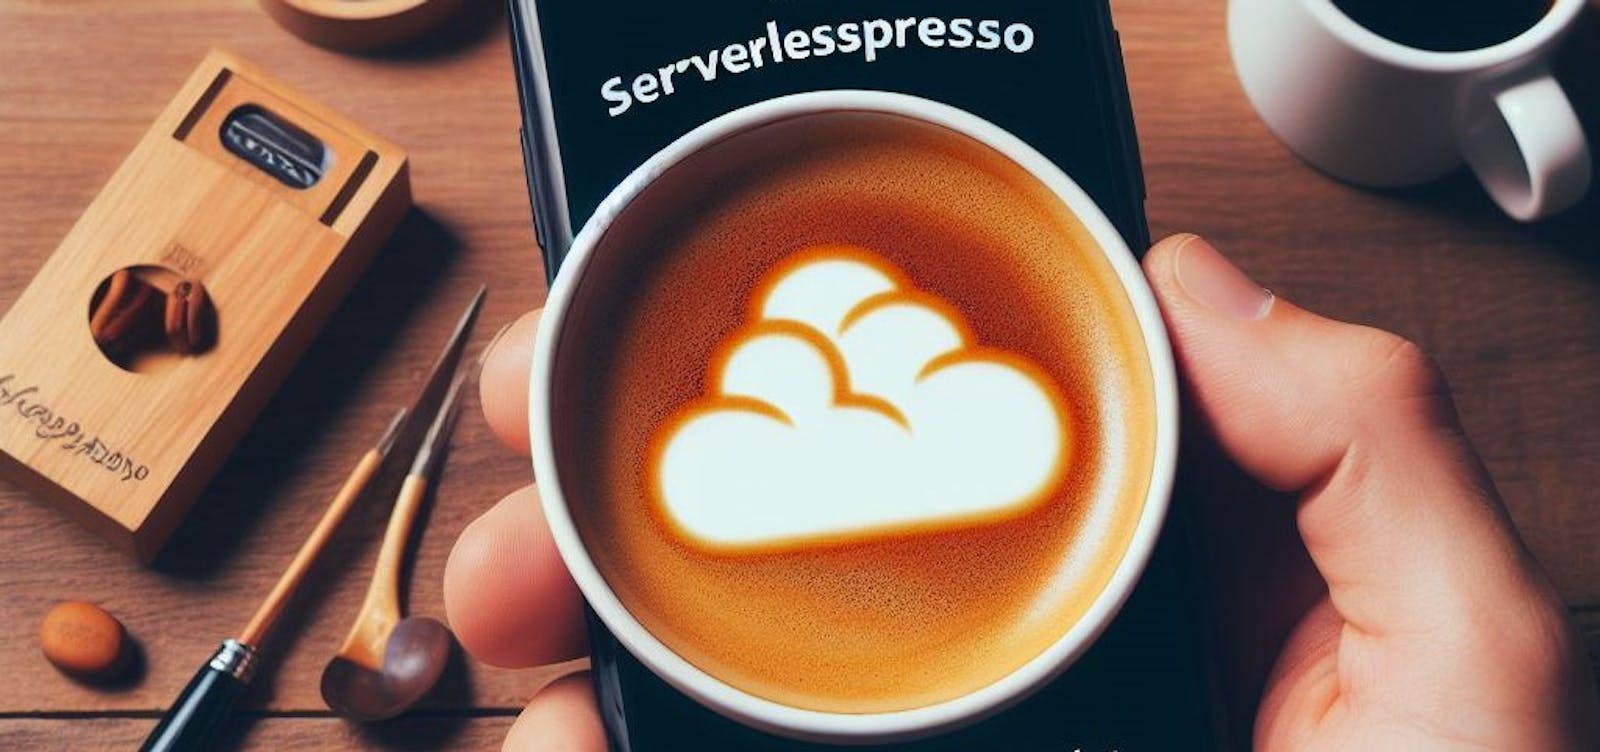 Building Serverlesspresso 2